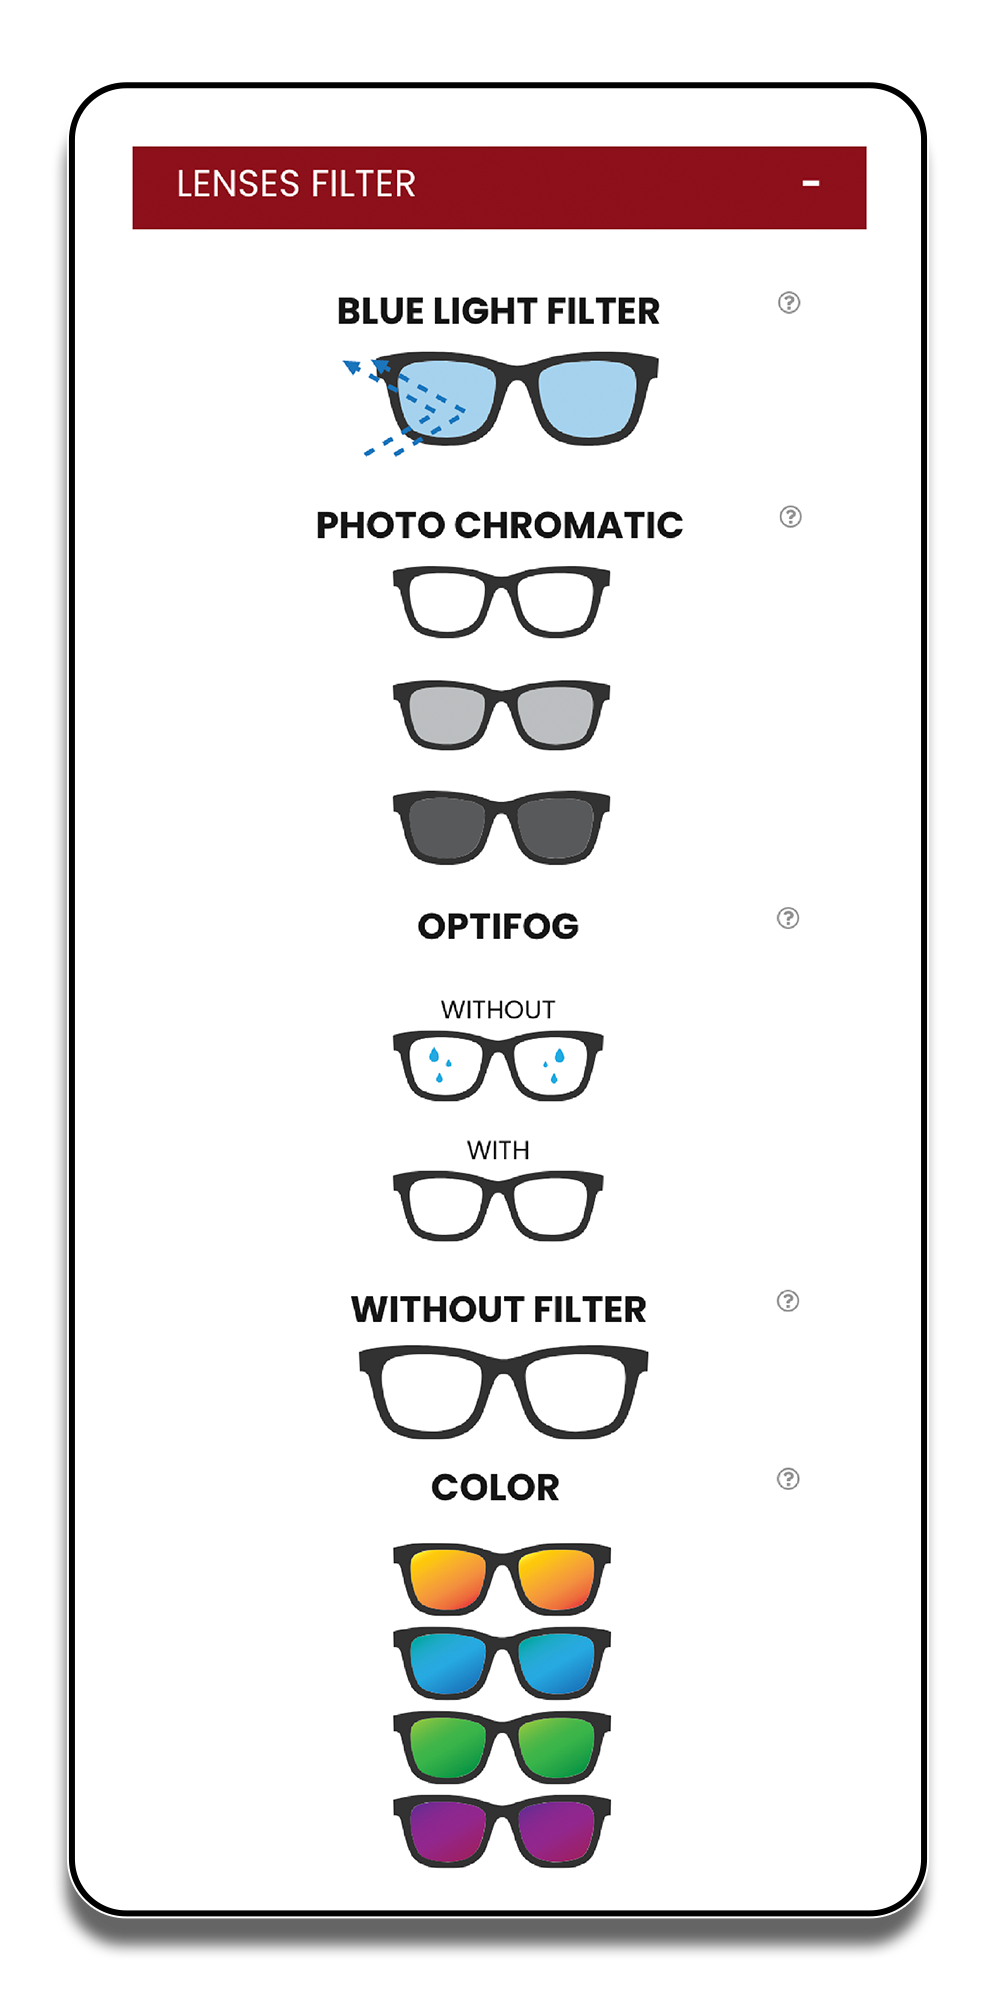 Lens filter